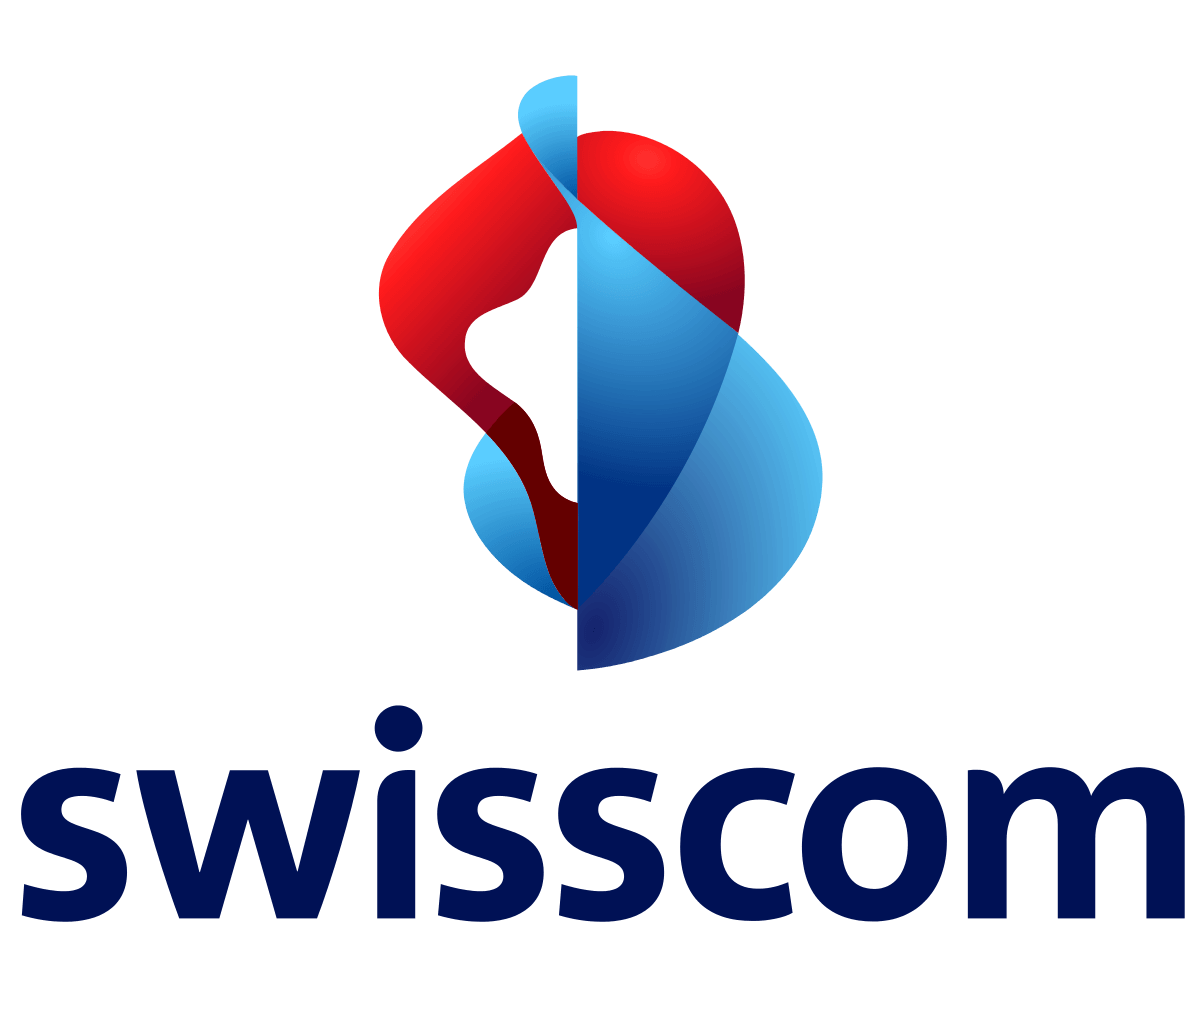 Swisscom-logo